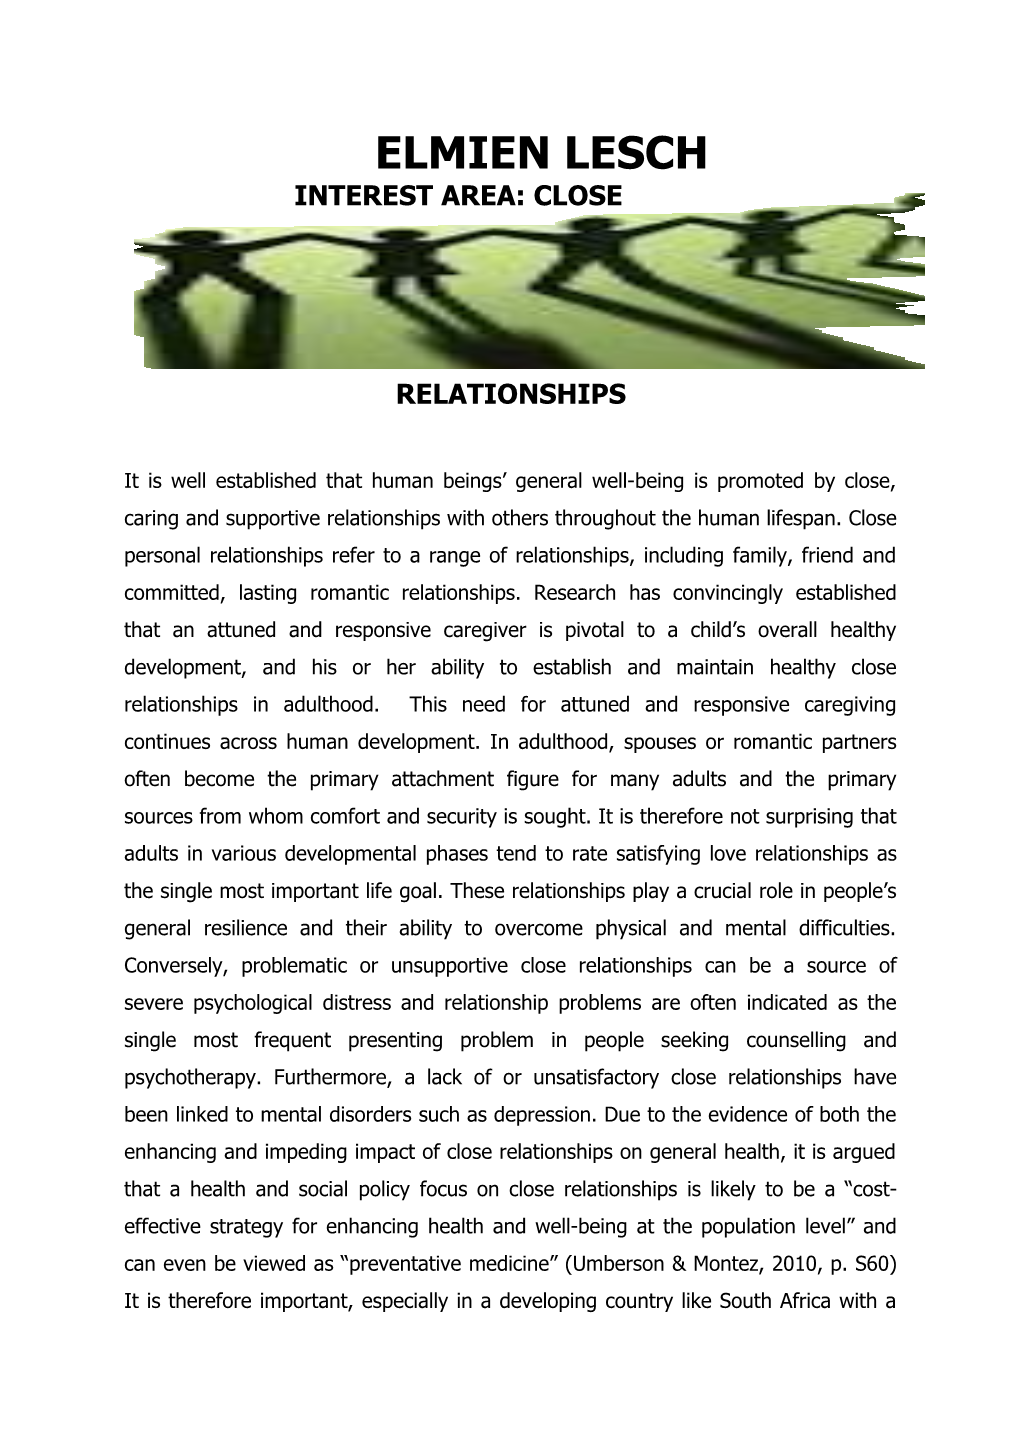 Interest Area: Close Relationships